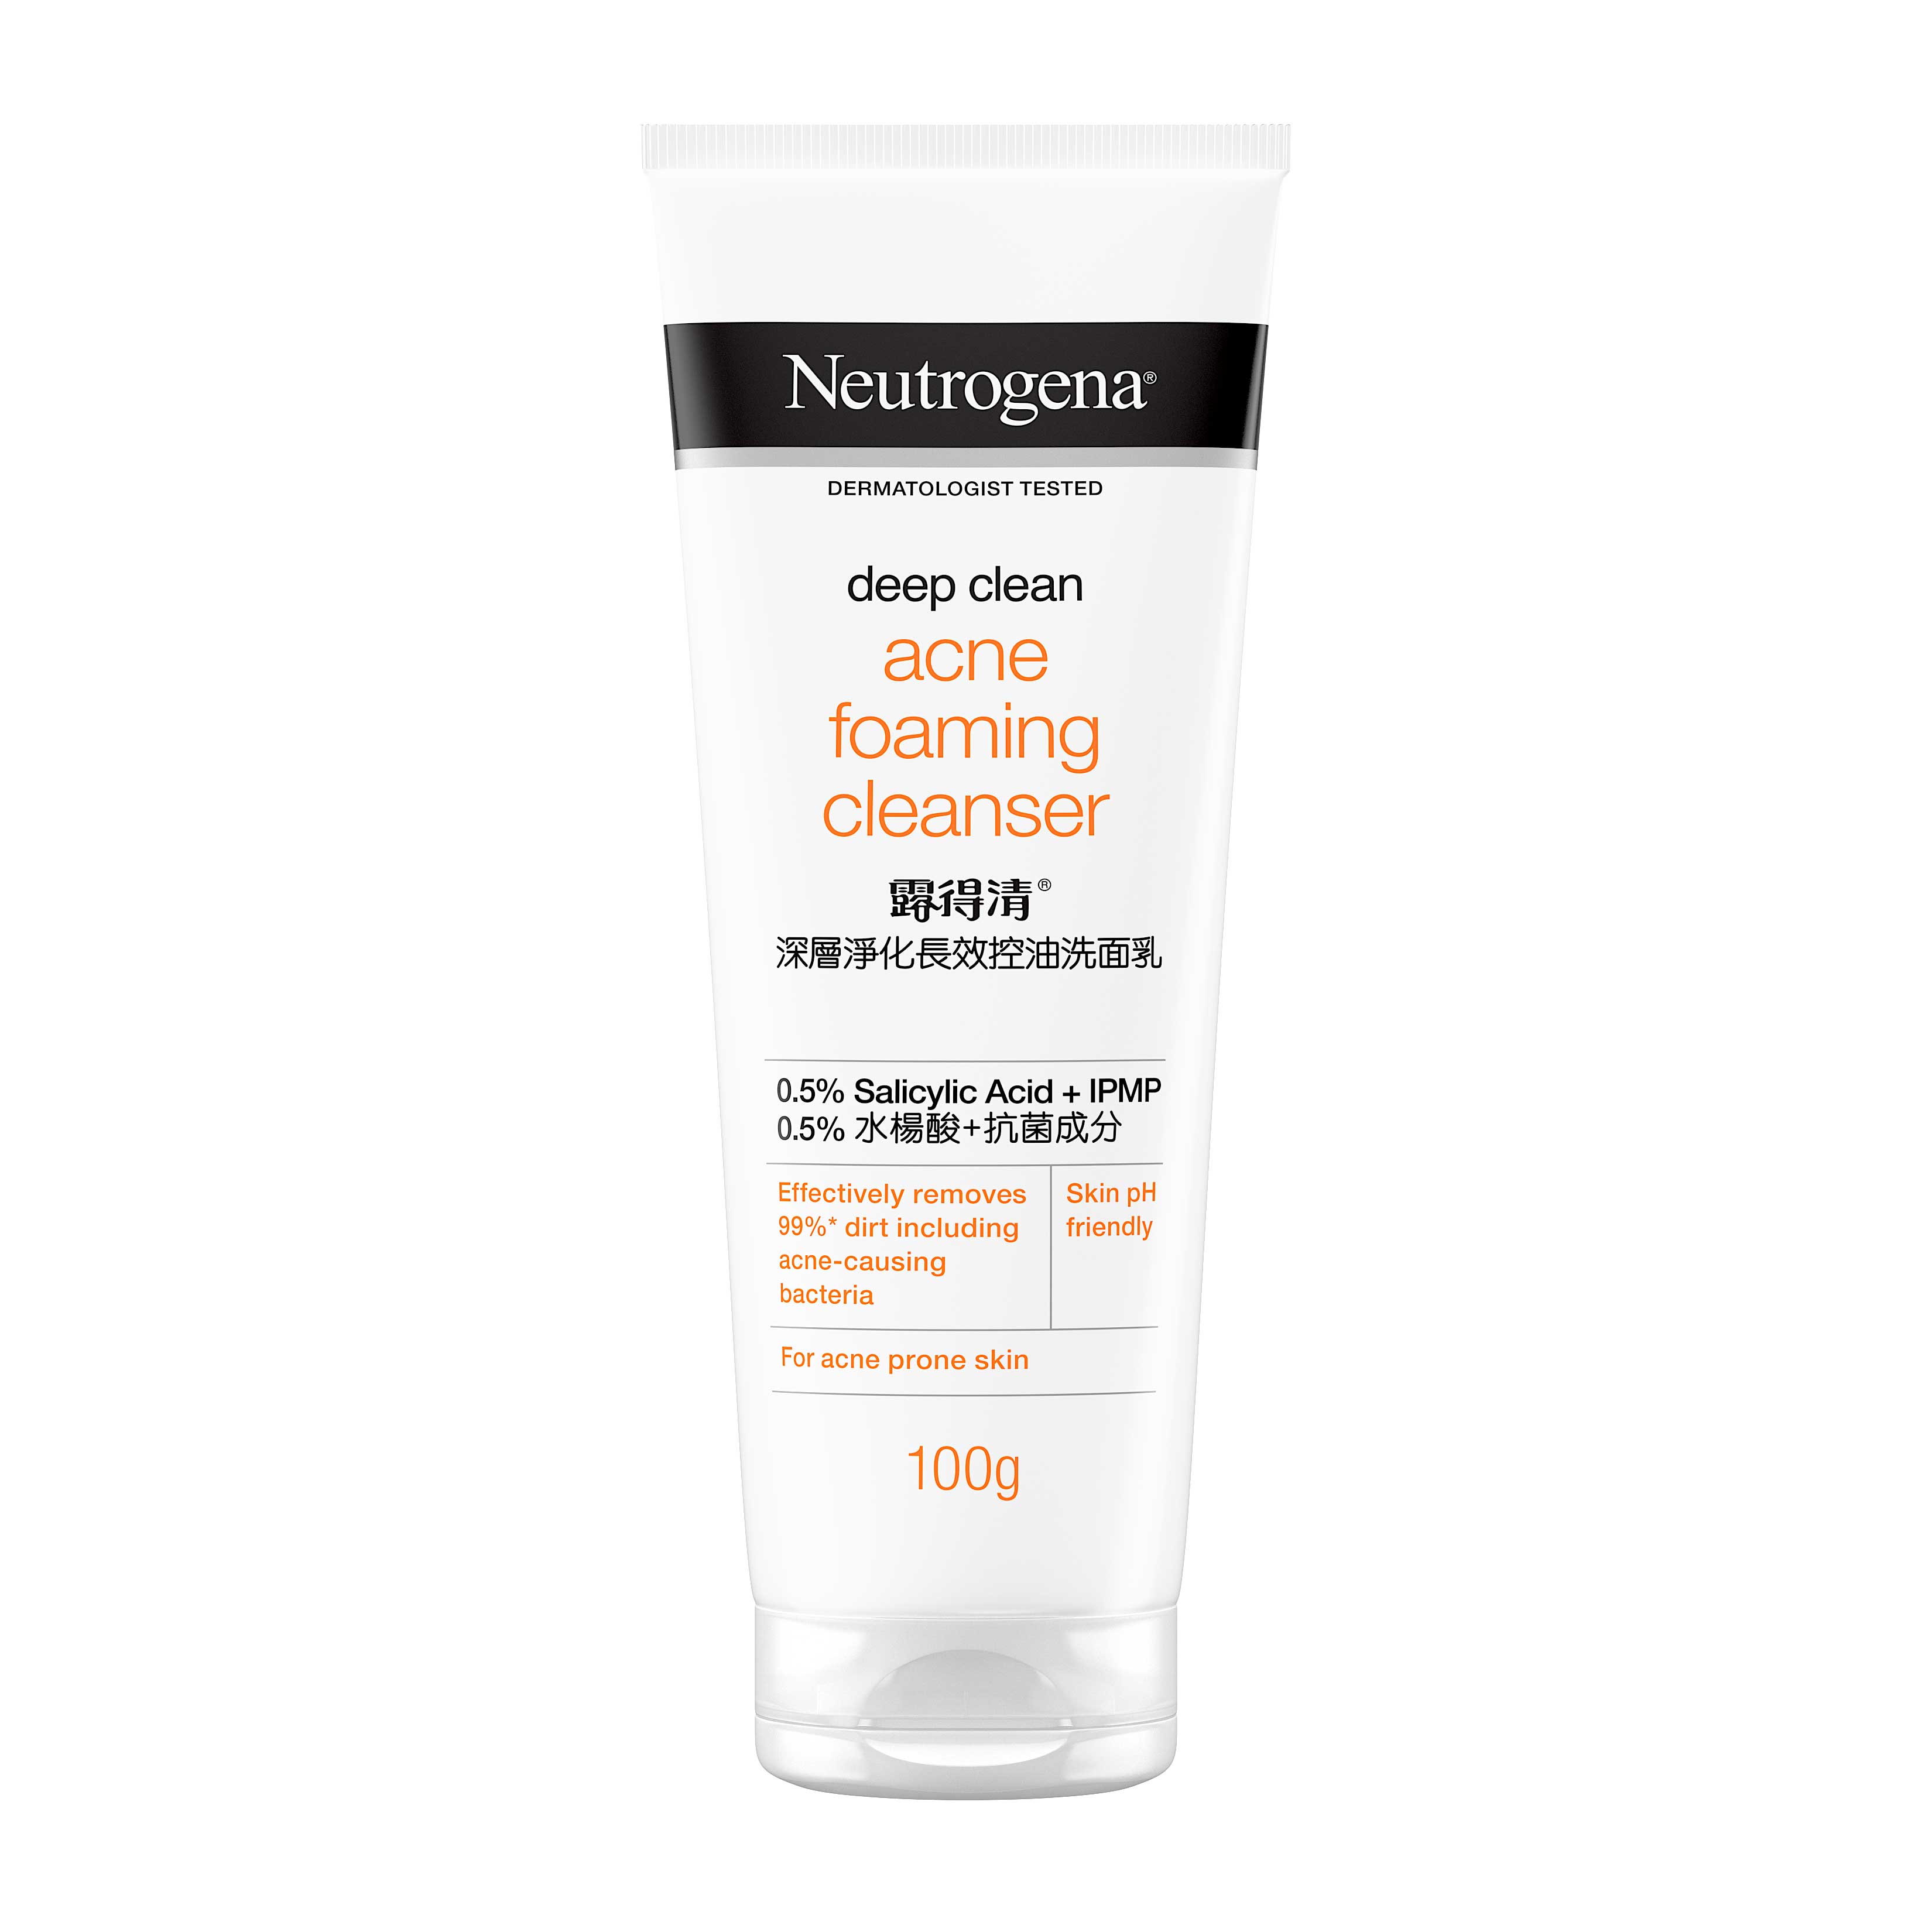 Neutrogena Acne Deep Clean Foaming Acne Cleanser_1